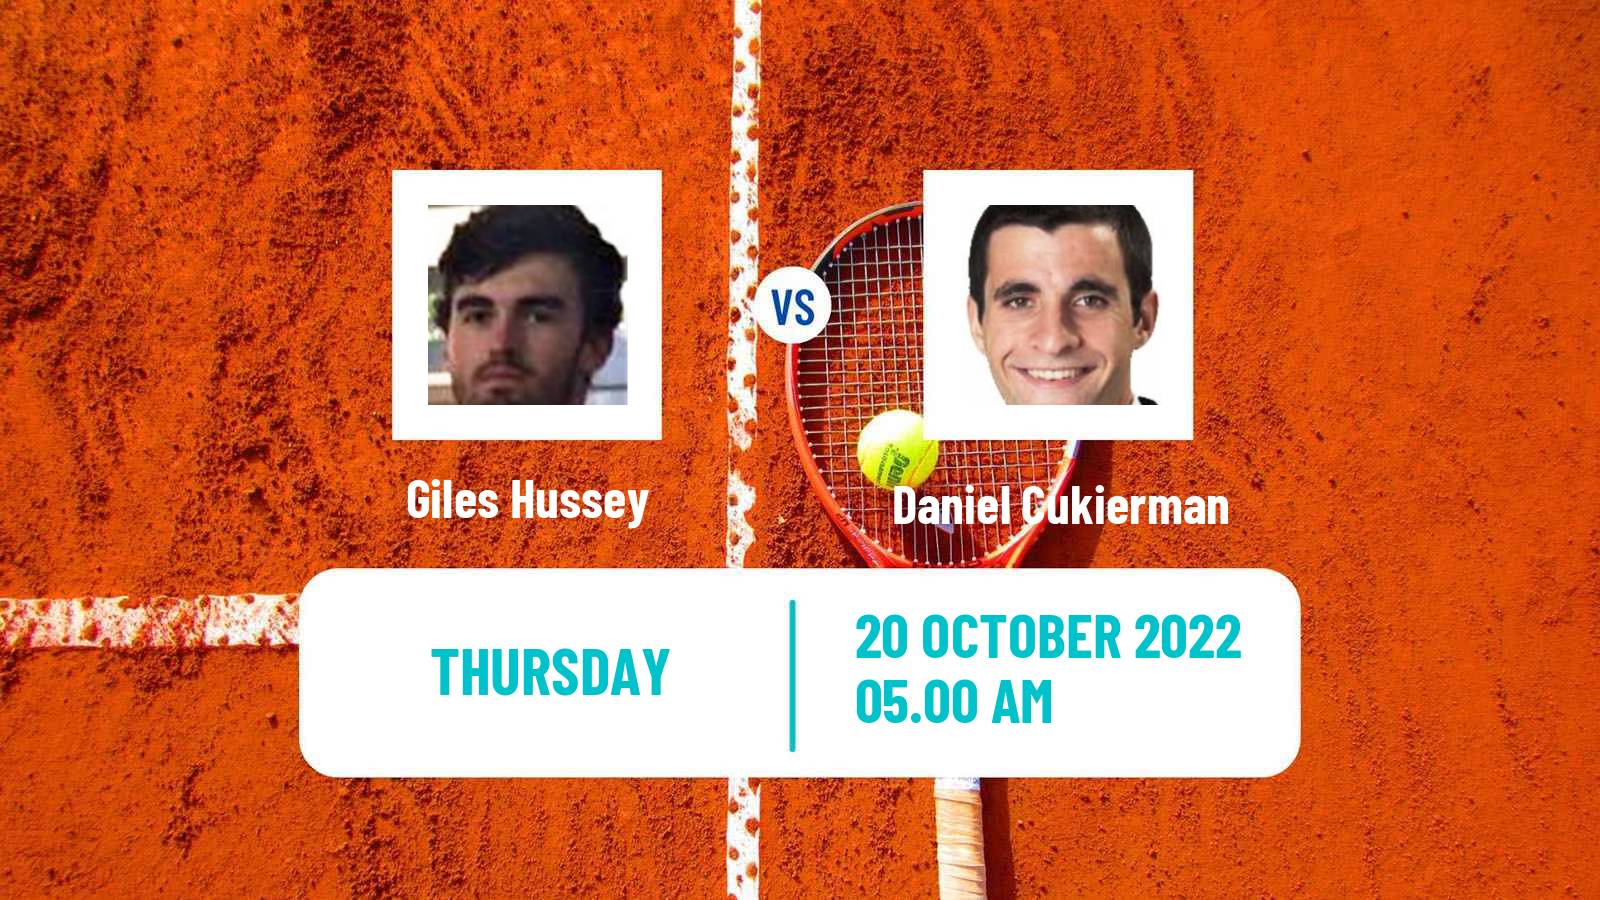 Tennis ITF Tournaments Giles Hussey - Daniel Cukierman